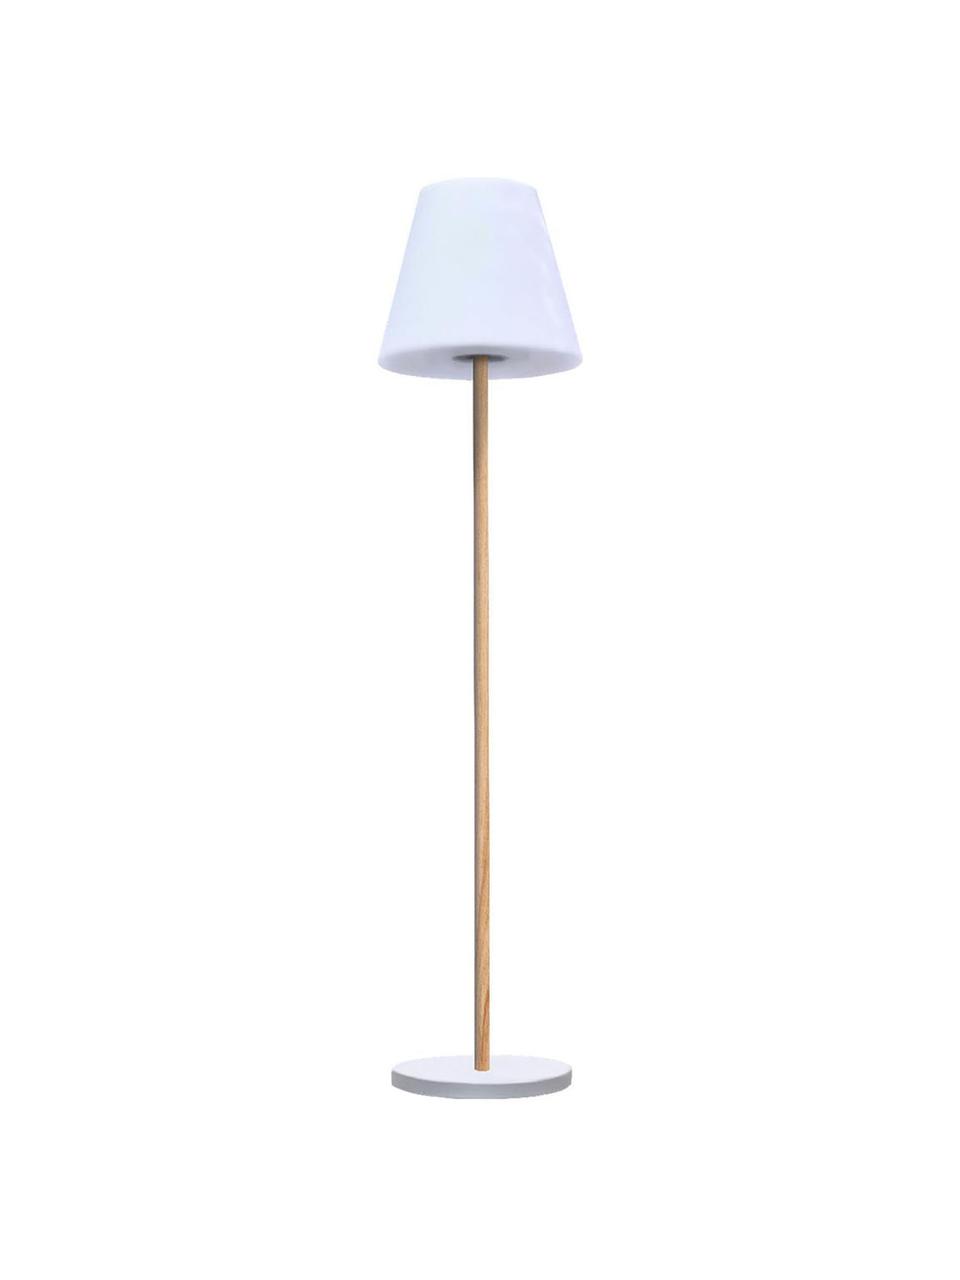 Dimbare Solar vloerlamp Standby met houten voet, Lampenkap: polyethyleen, Lampvoet: hout, Wit, lichtbruin, Ø 34 x H 150 cm